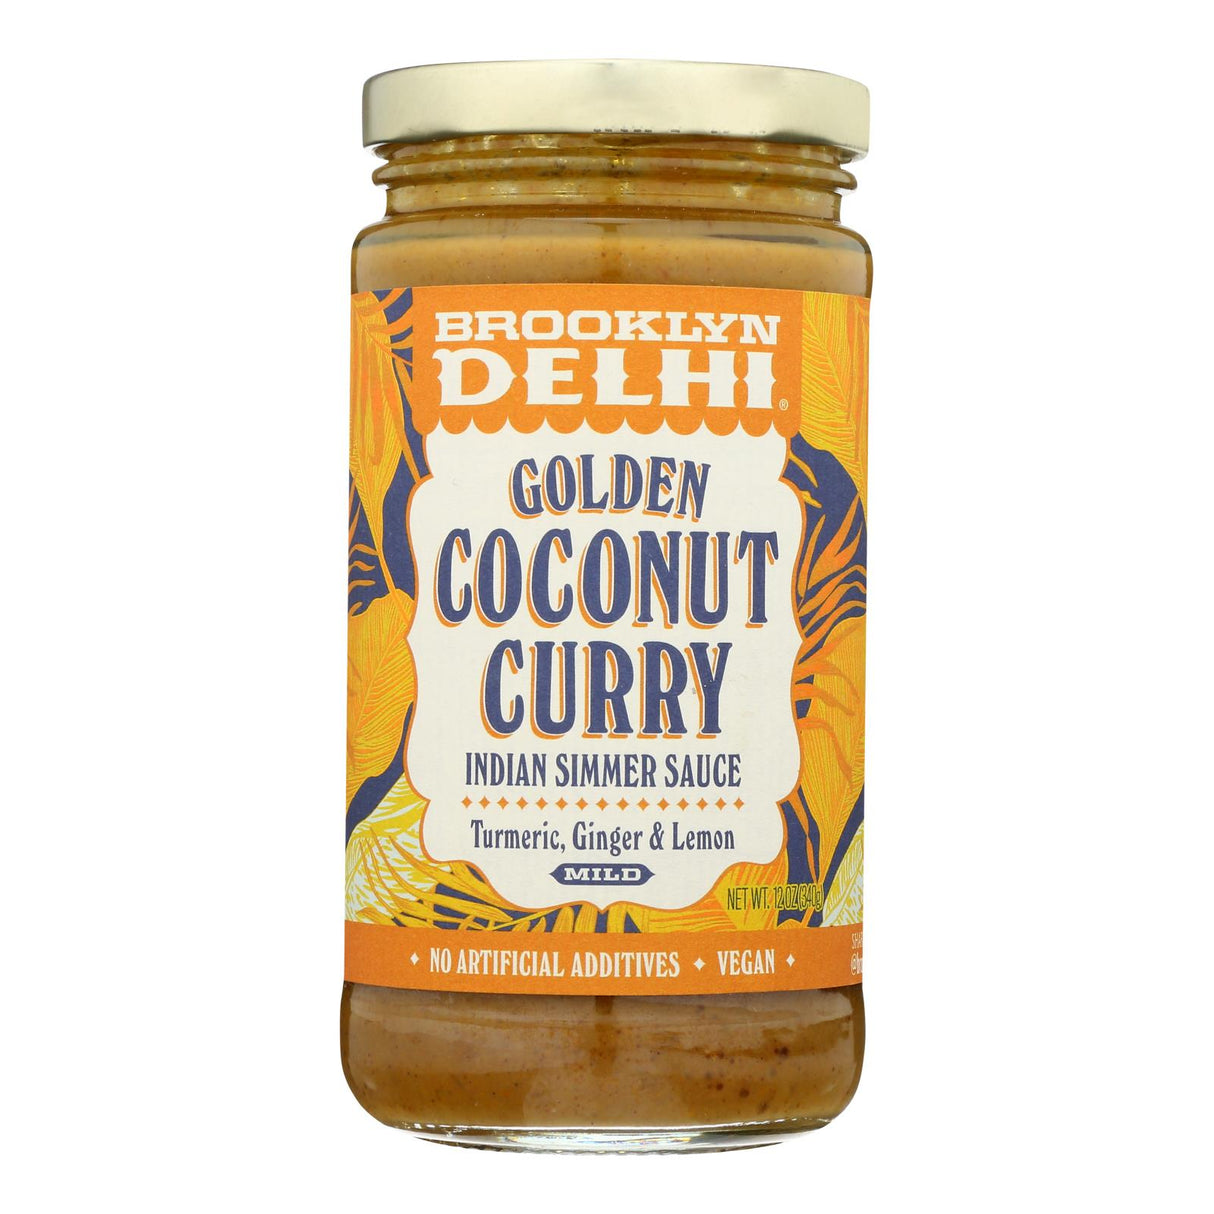 Brooklyn Delhi Golden Coconut Curry Simmer Sauce (6-Pack, 12 Oz. Each) - Cozy Farm 